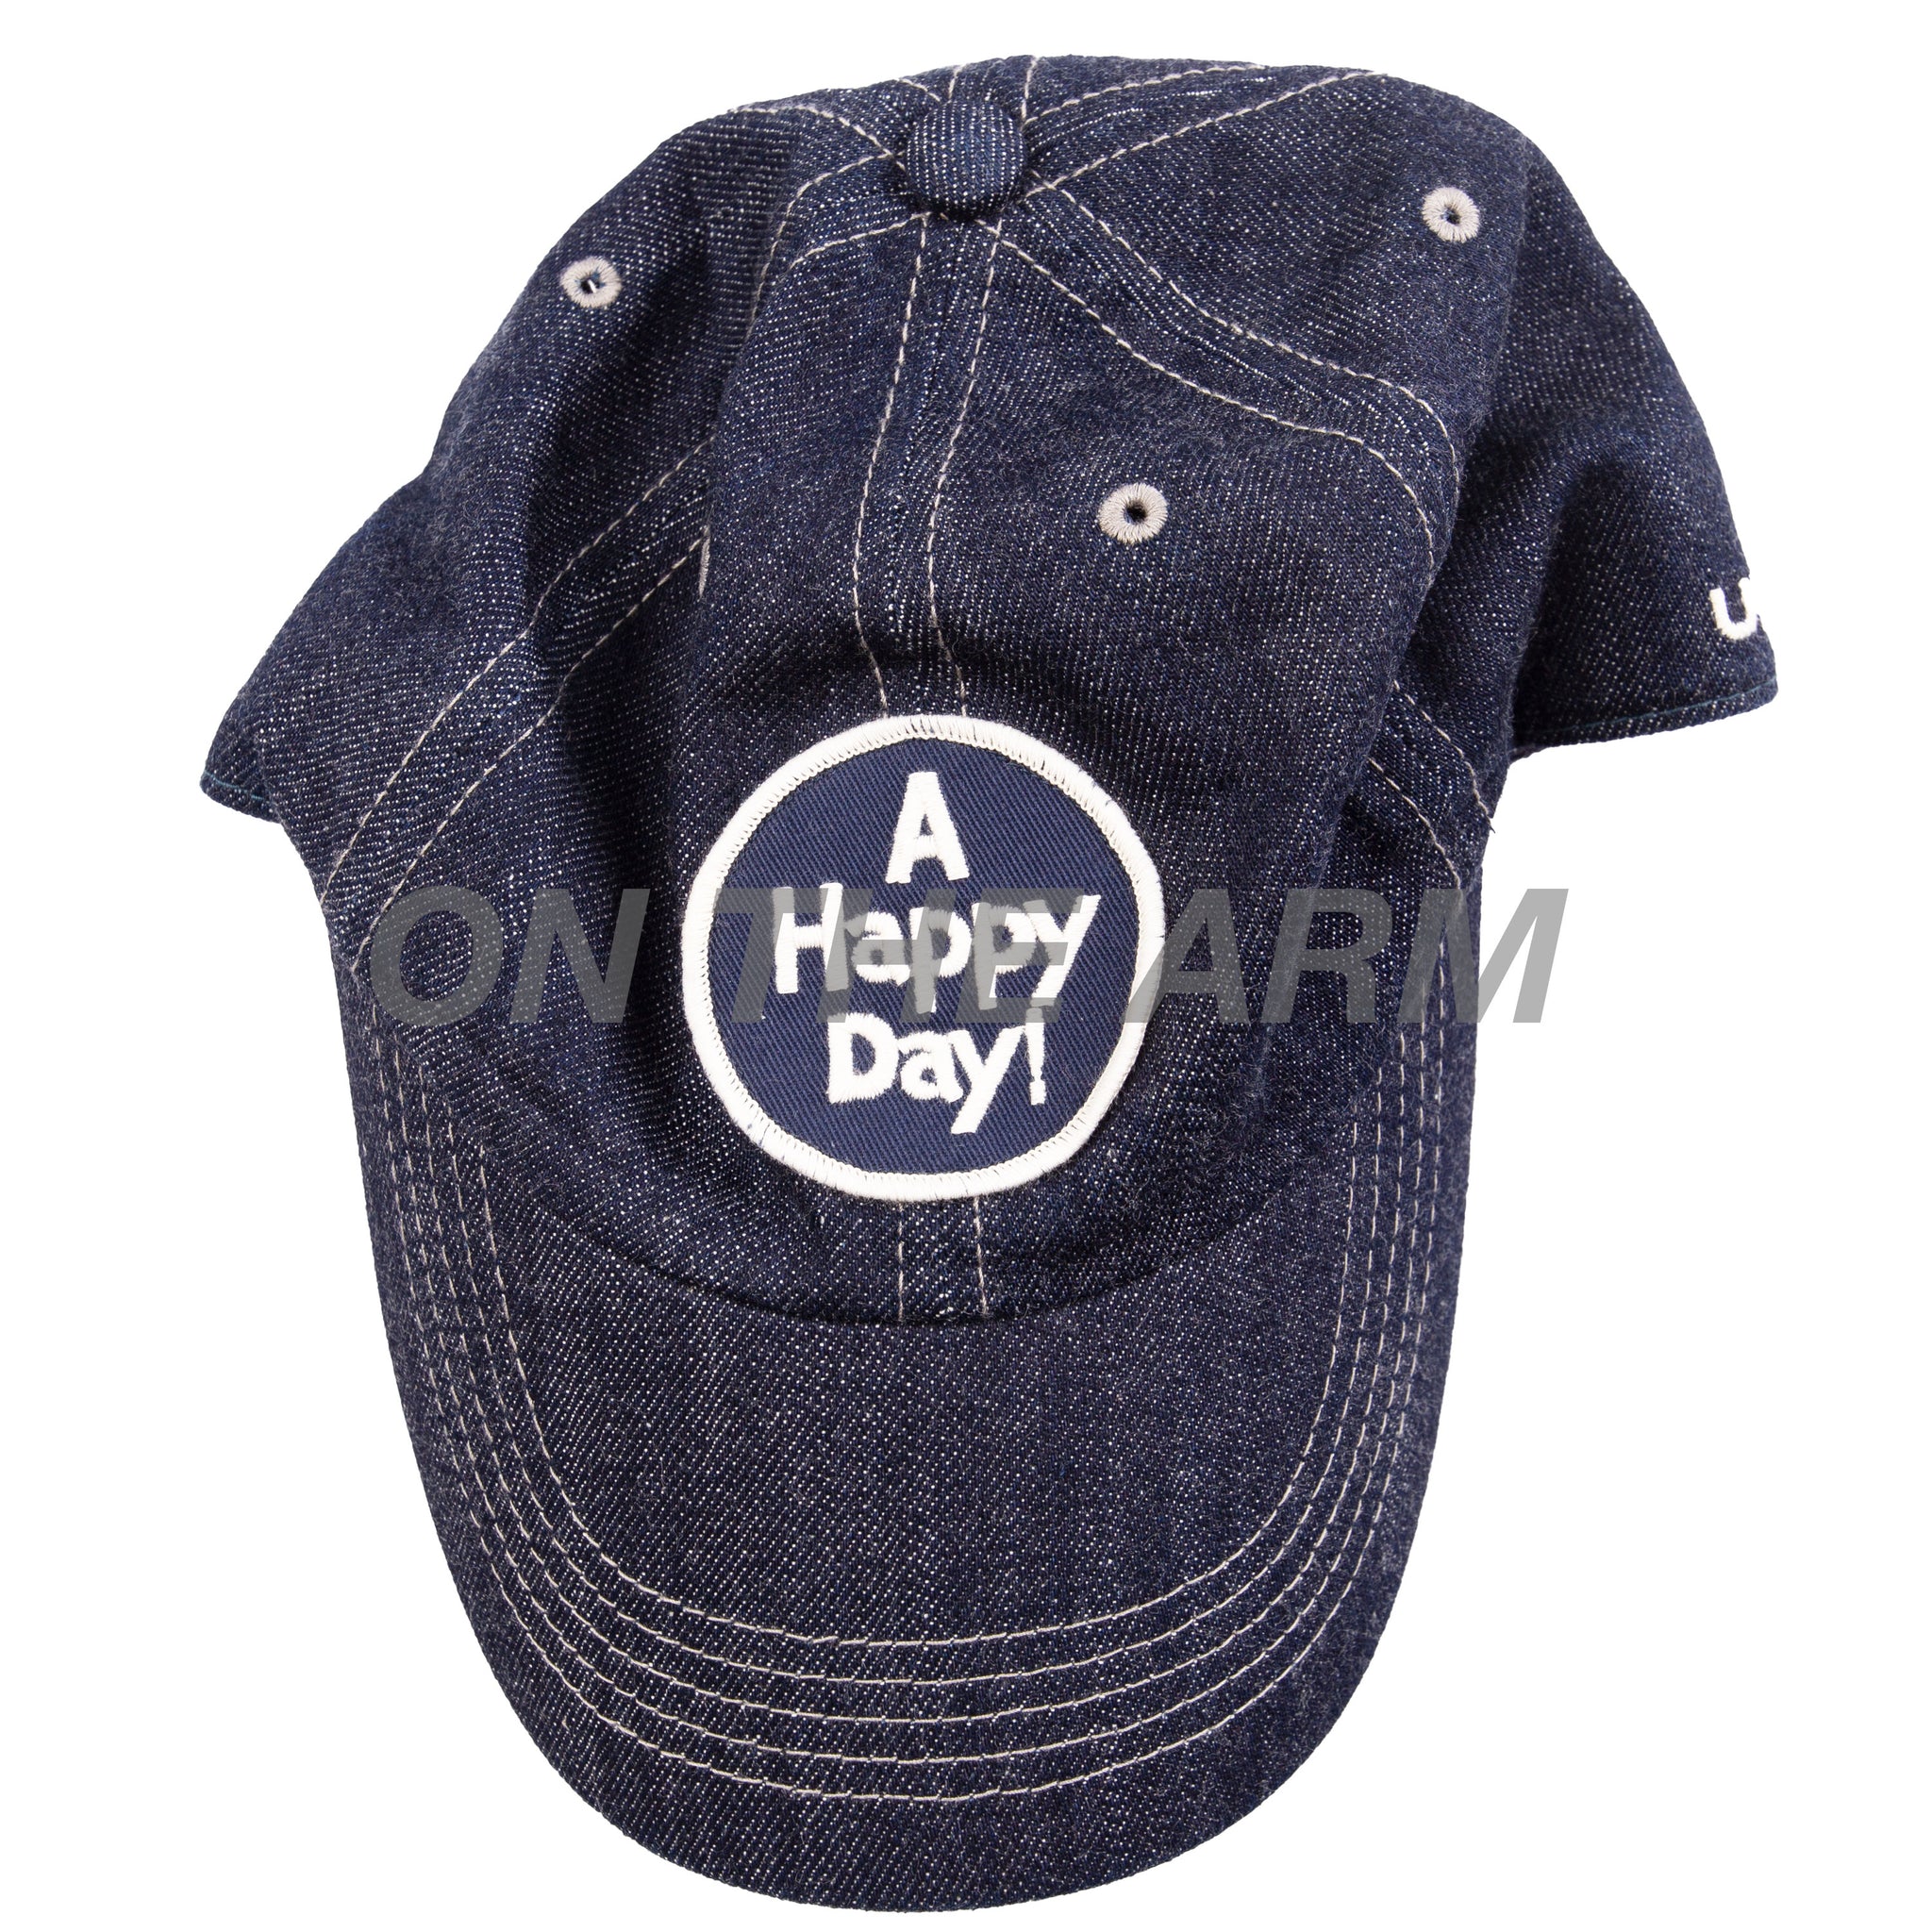 Vintage Black Denim Happy Day Hat